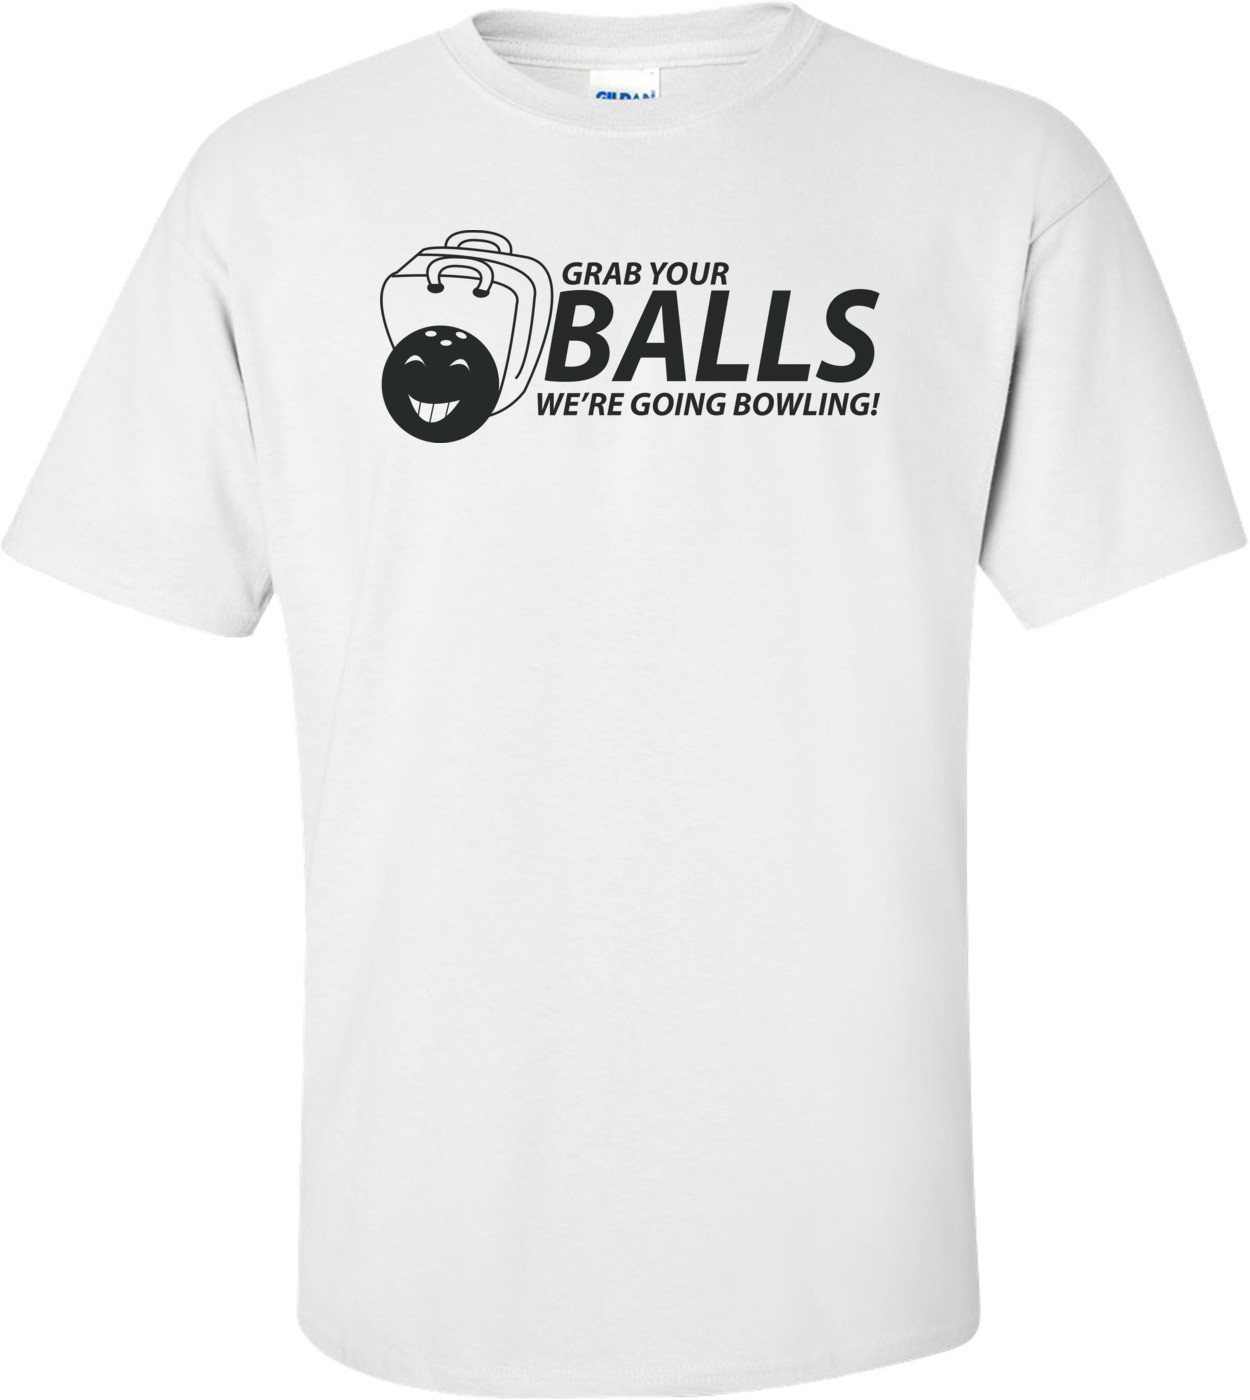 Grab Your Balls We're Going Bowling T-shirt